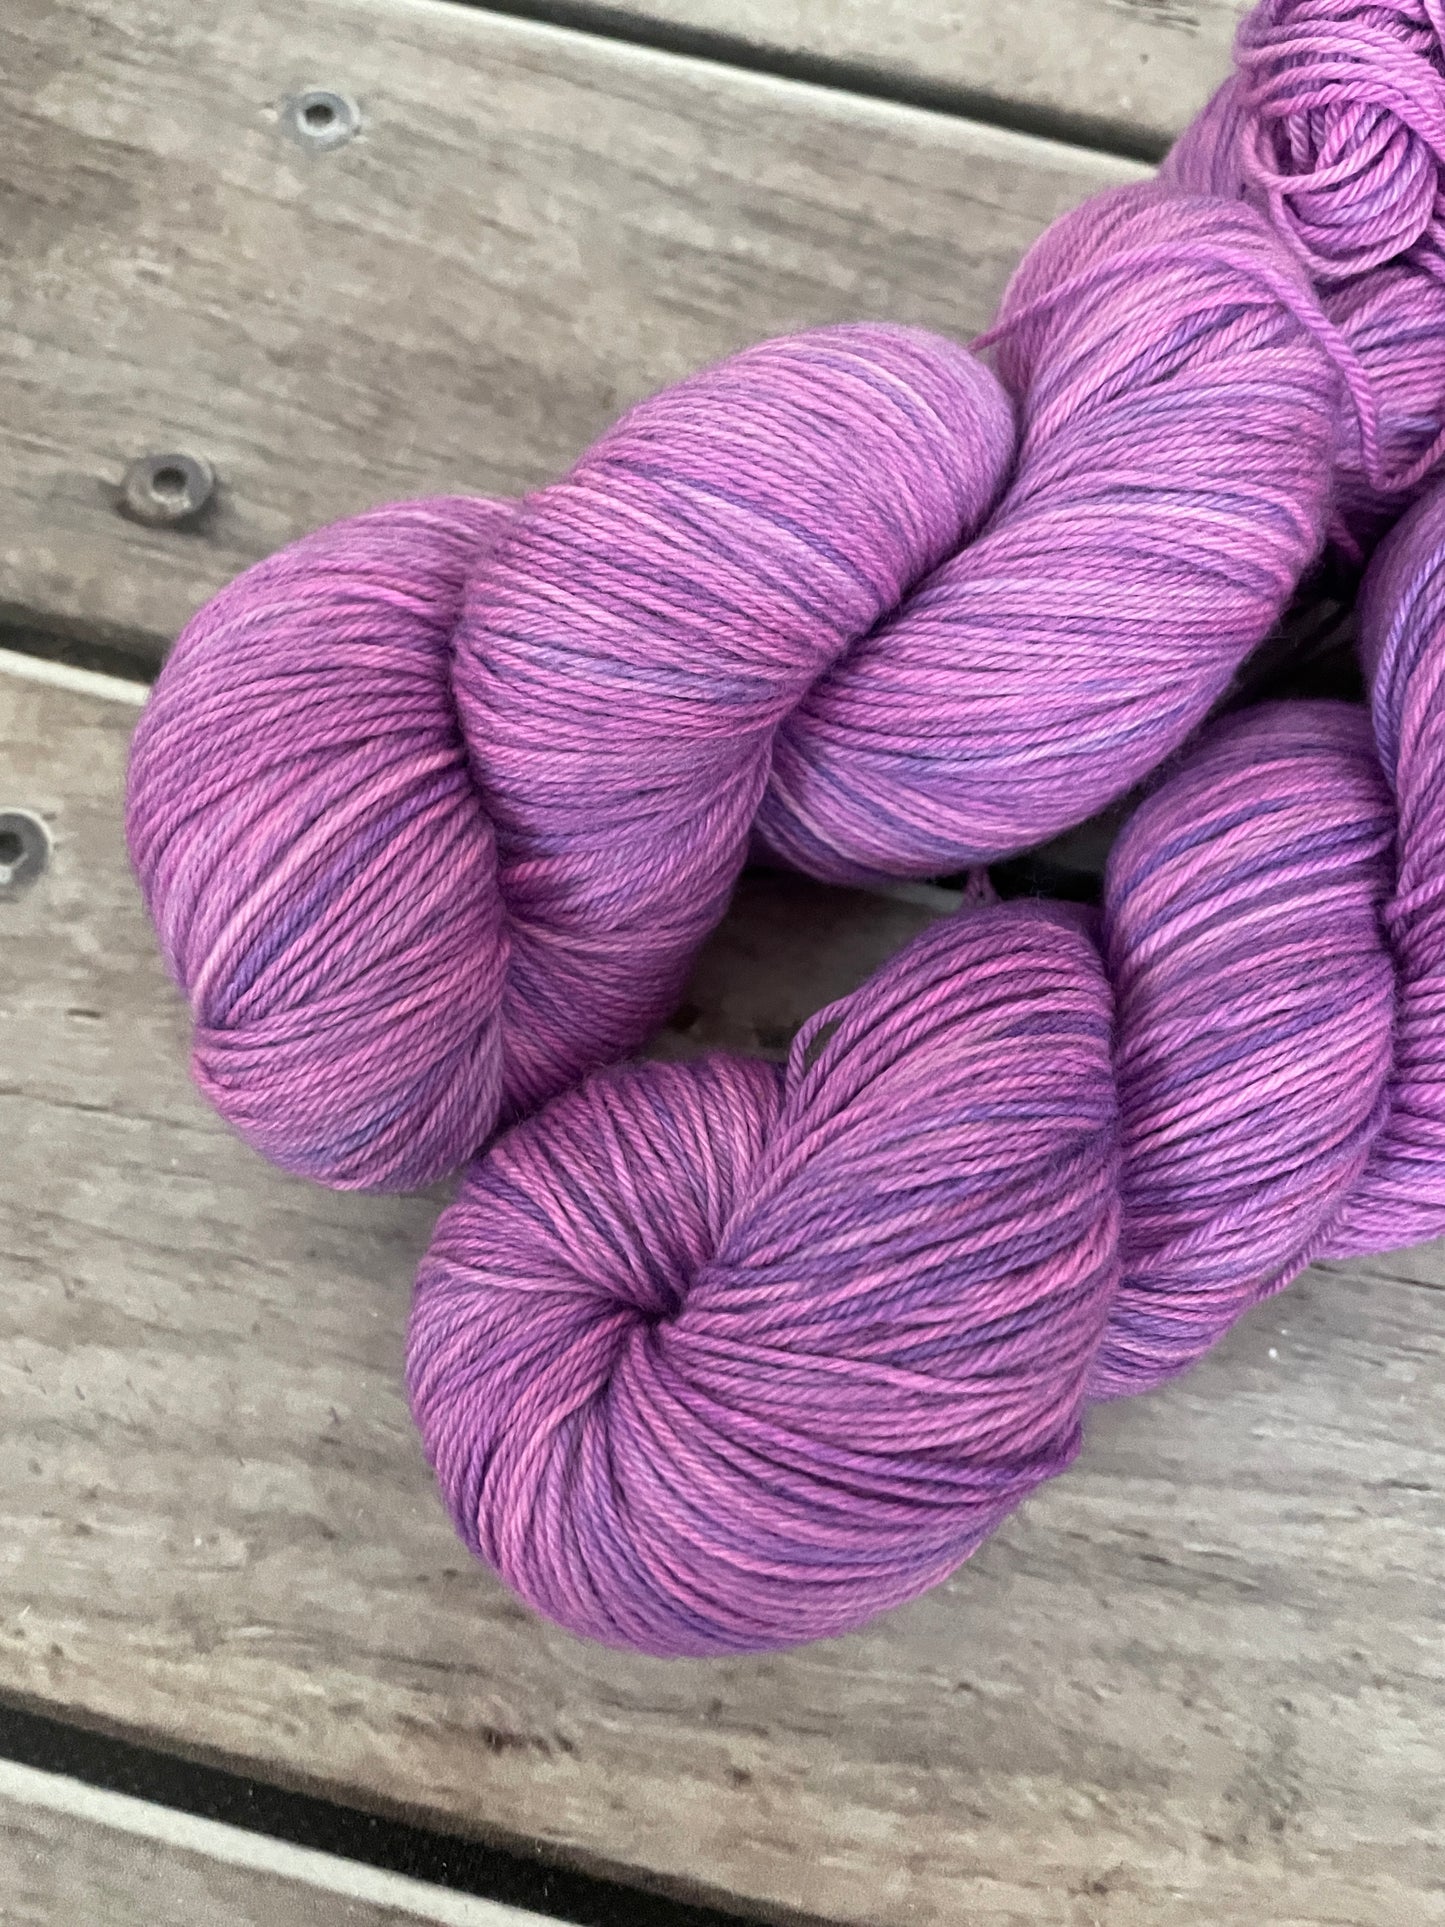 Shrinking Violets  - sock yarn in merino and nylon - Darjeeling